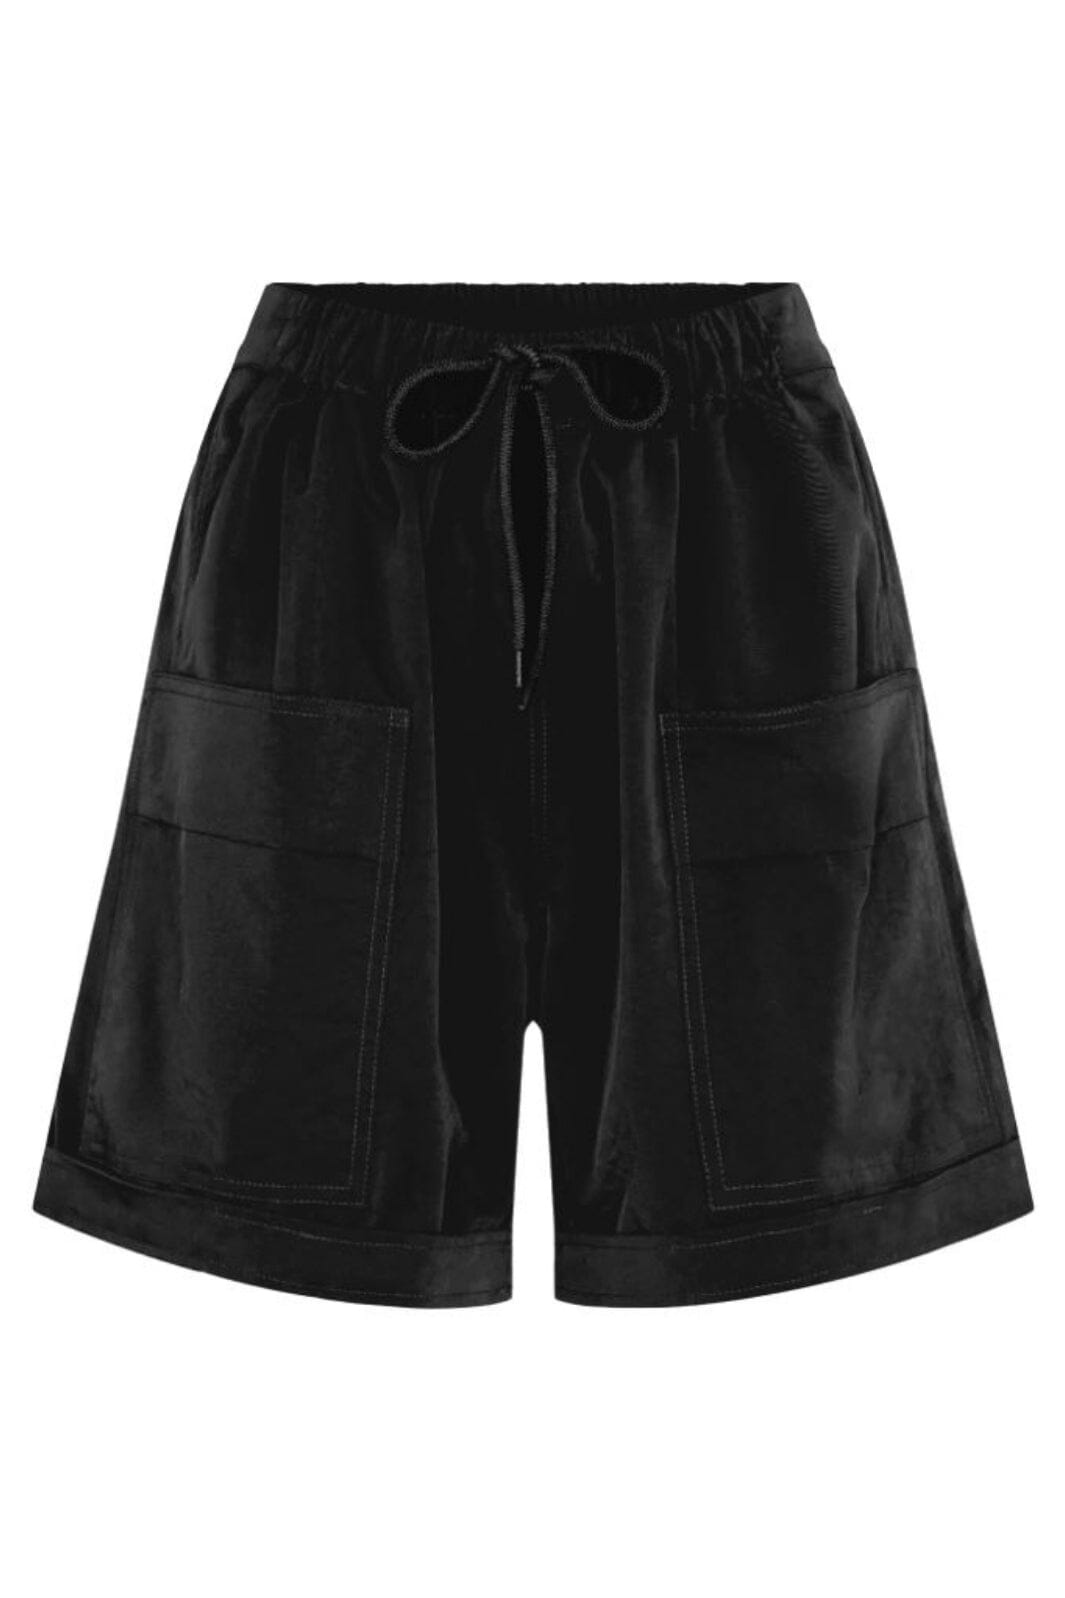 Gossia - GOThilla Jo Shorts - Black Shorts 